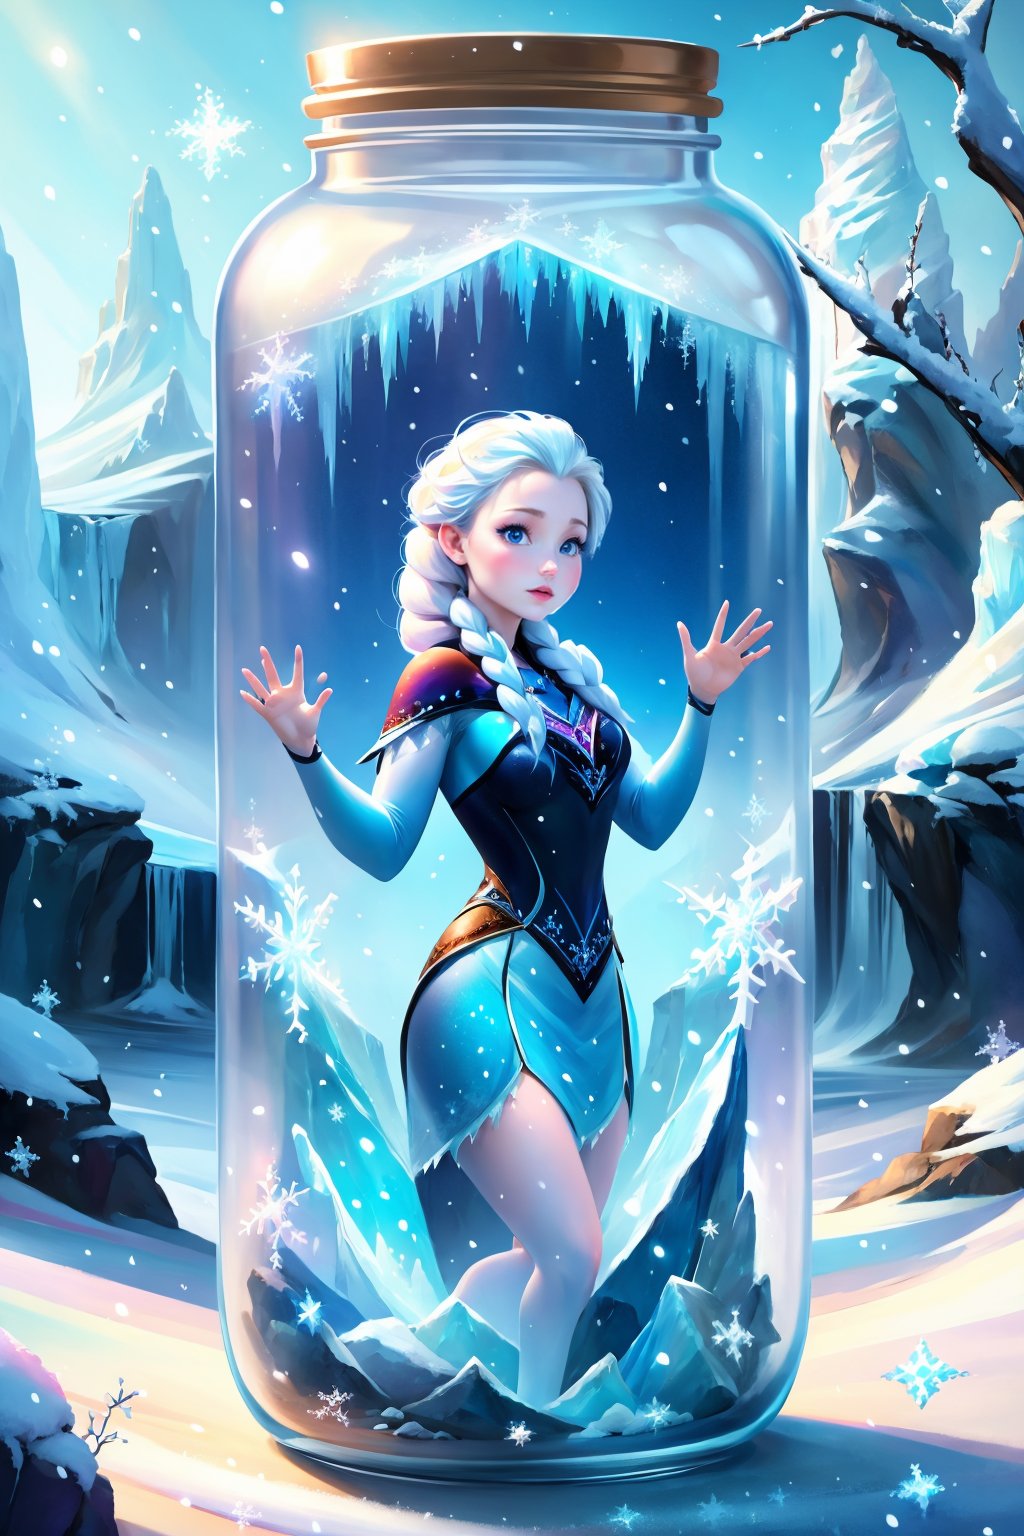 1 girl, frozen, blue theme, nature, realistic